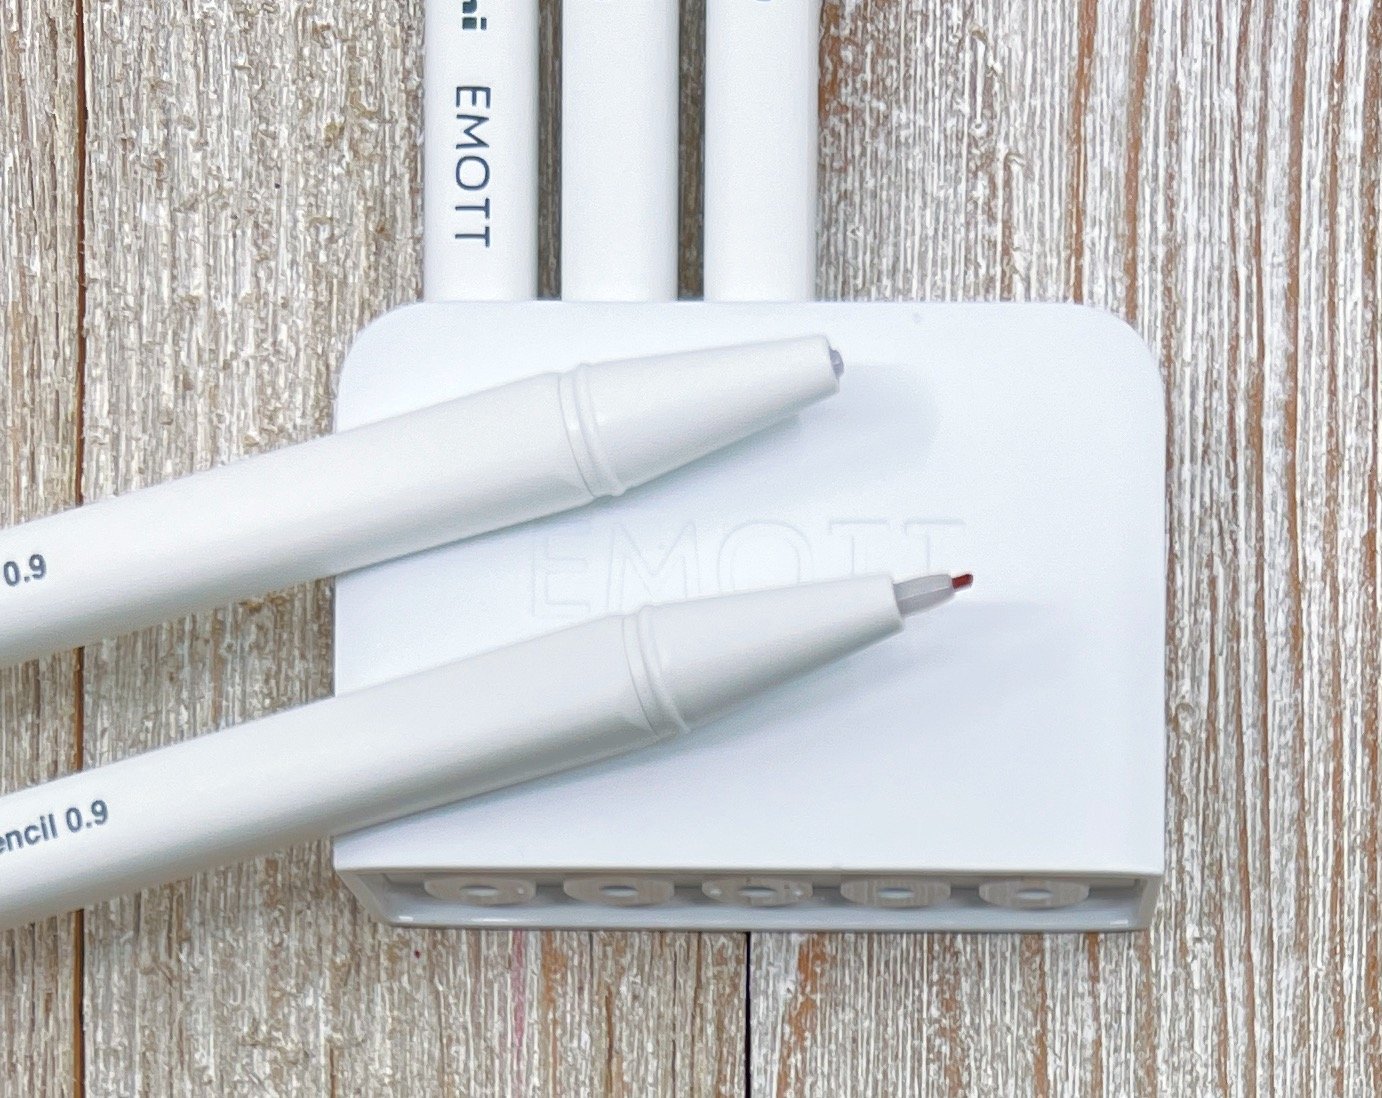 Emott Fineliner Pens Soft Colors Box of 10